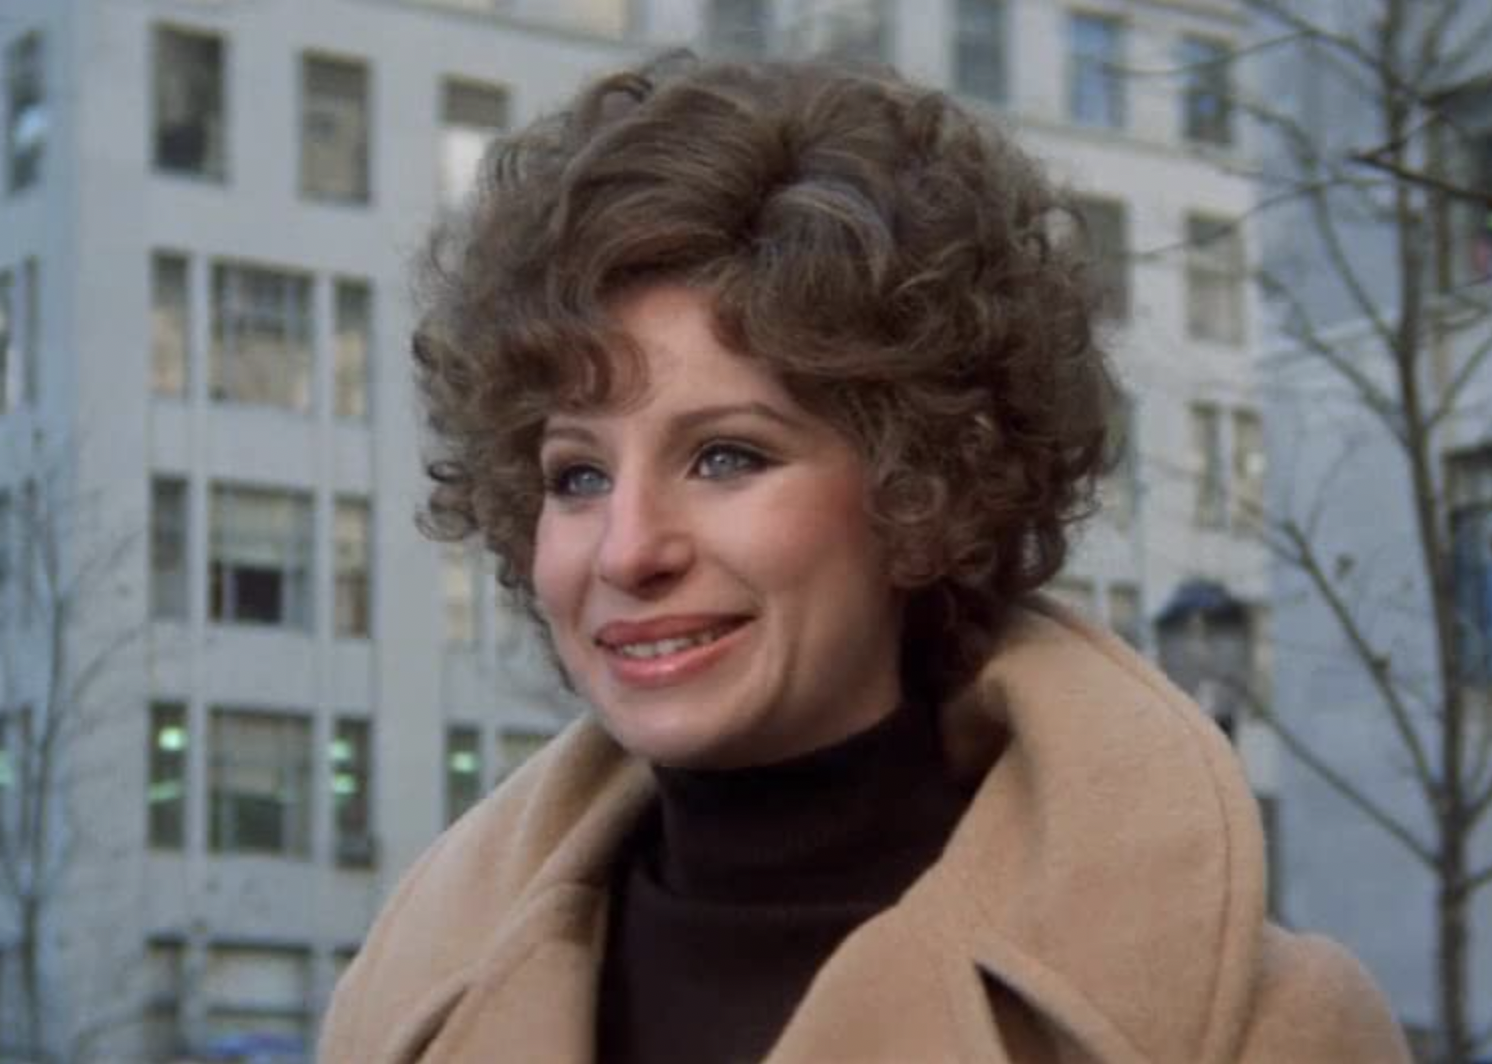 Barbra Streisand in a scene from "The Way We Were".